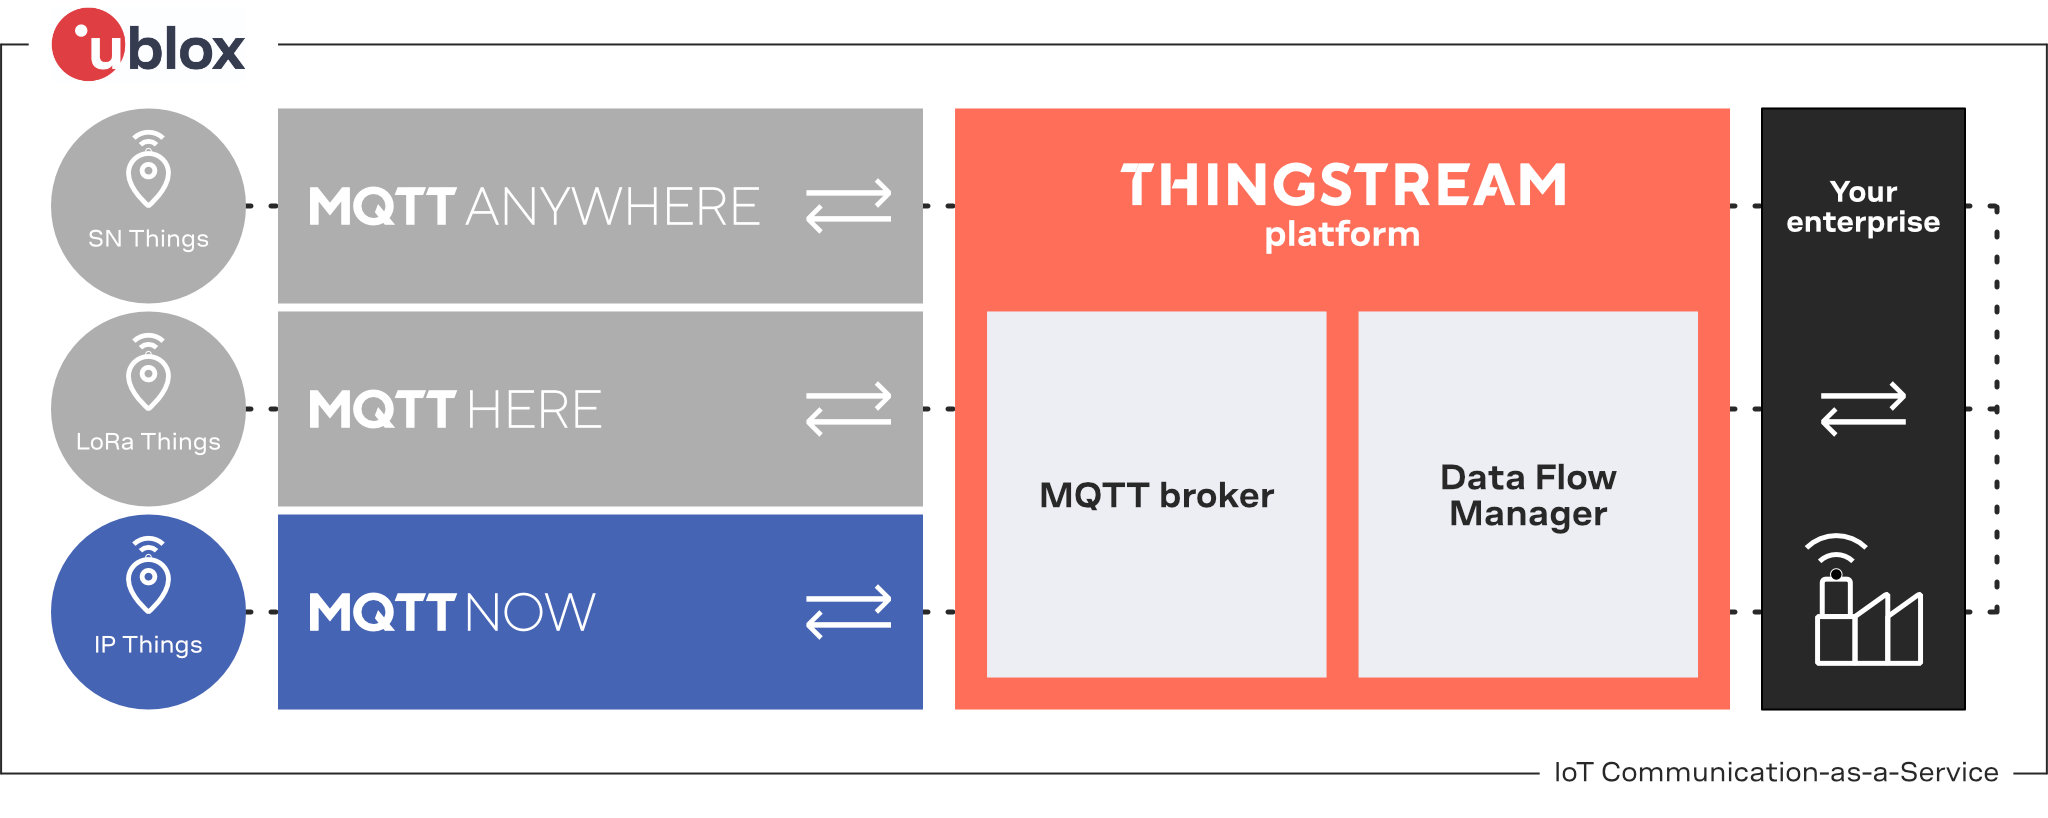 MQTT Now u-blox IoT Communication-as-a-Service